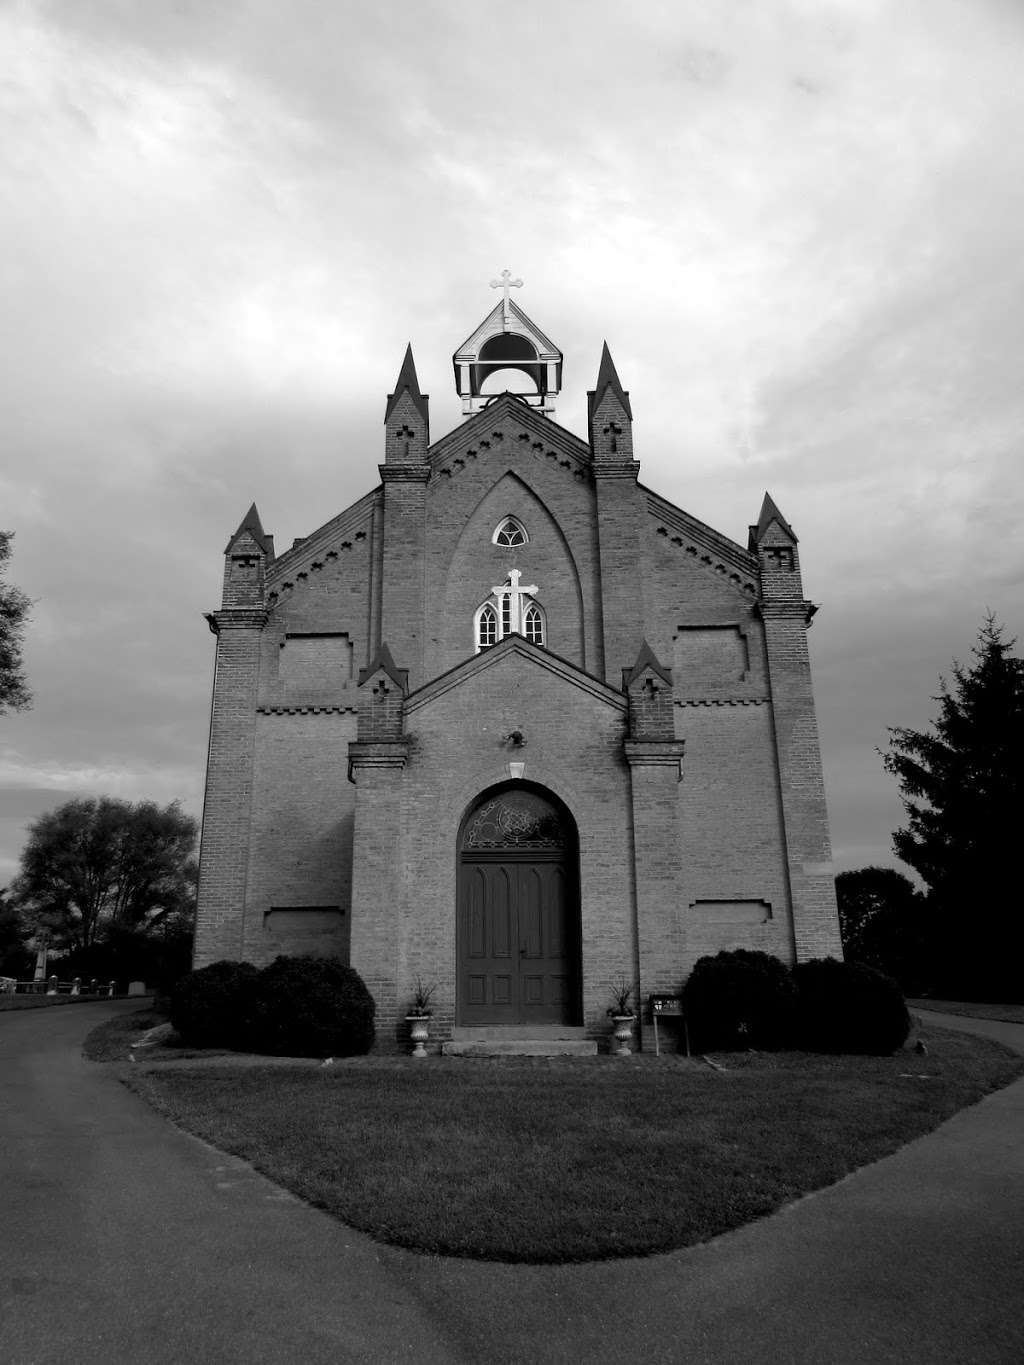 Meade Memorial Episcopal Church | 192 White Post Rd, White Post, VA 22663, USA | Phone: (540) 837-2334